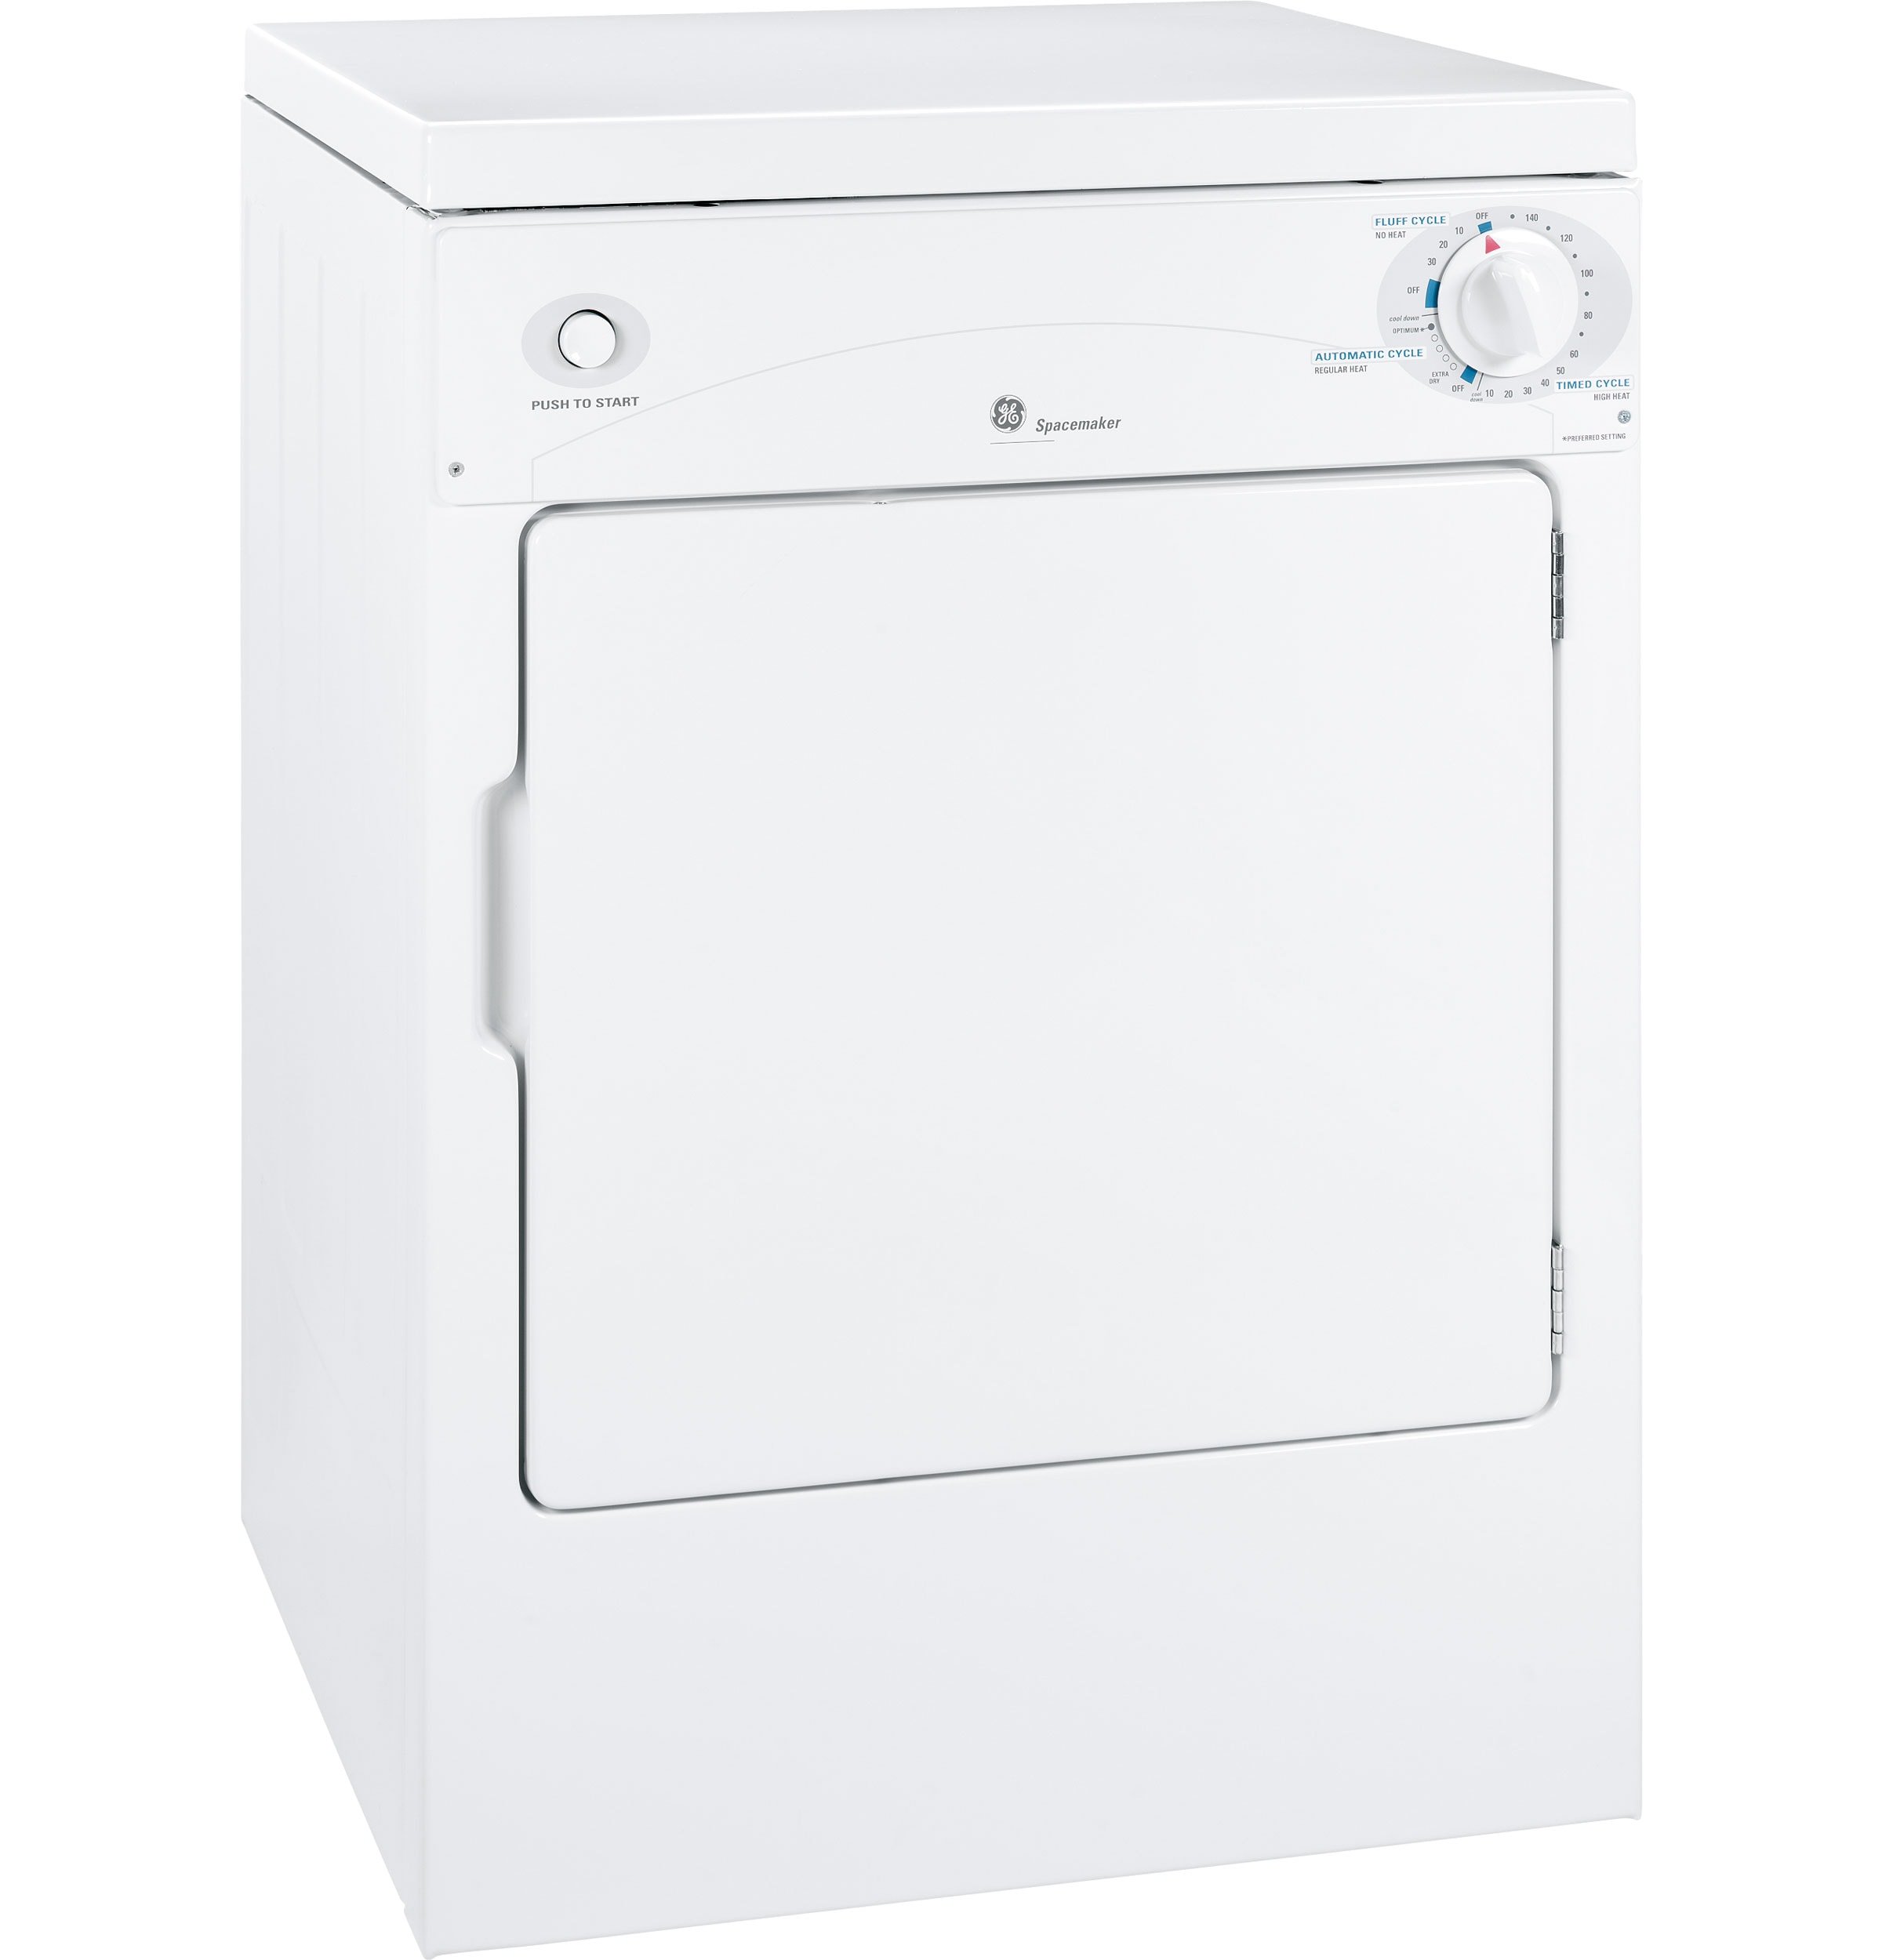 110 Volt Electric Clothes Dryer For Apartment